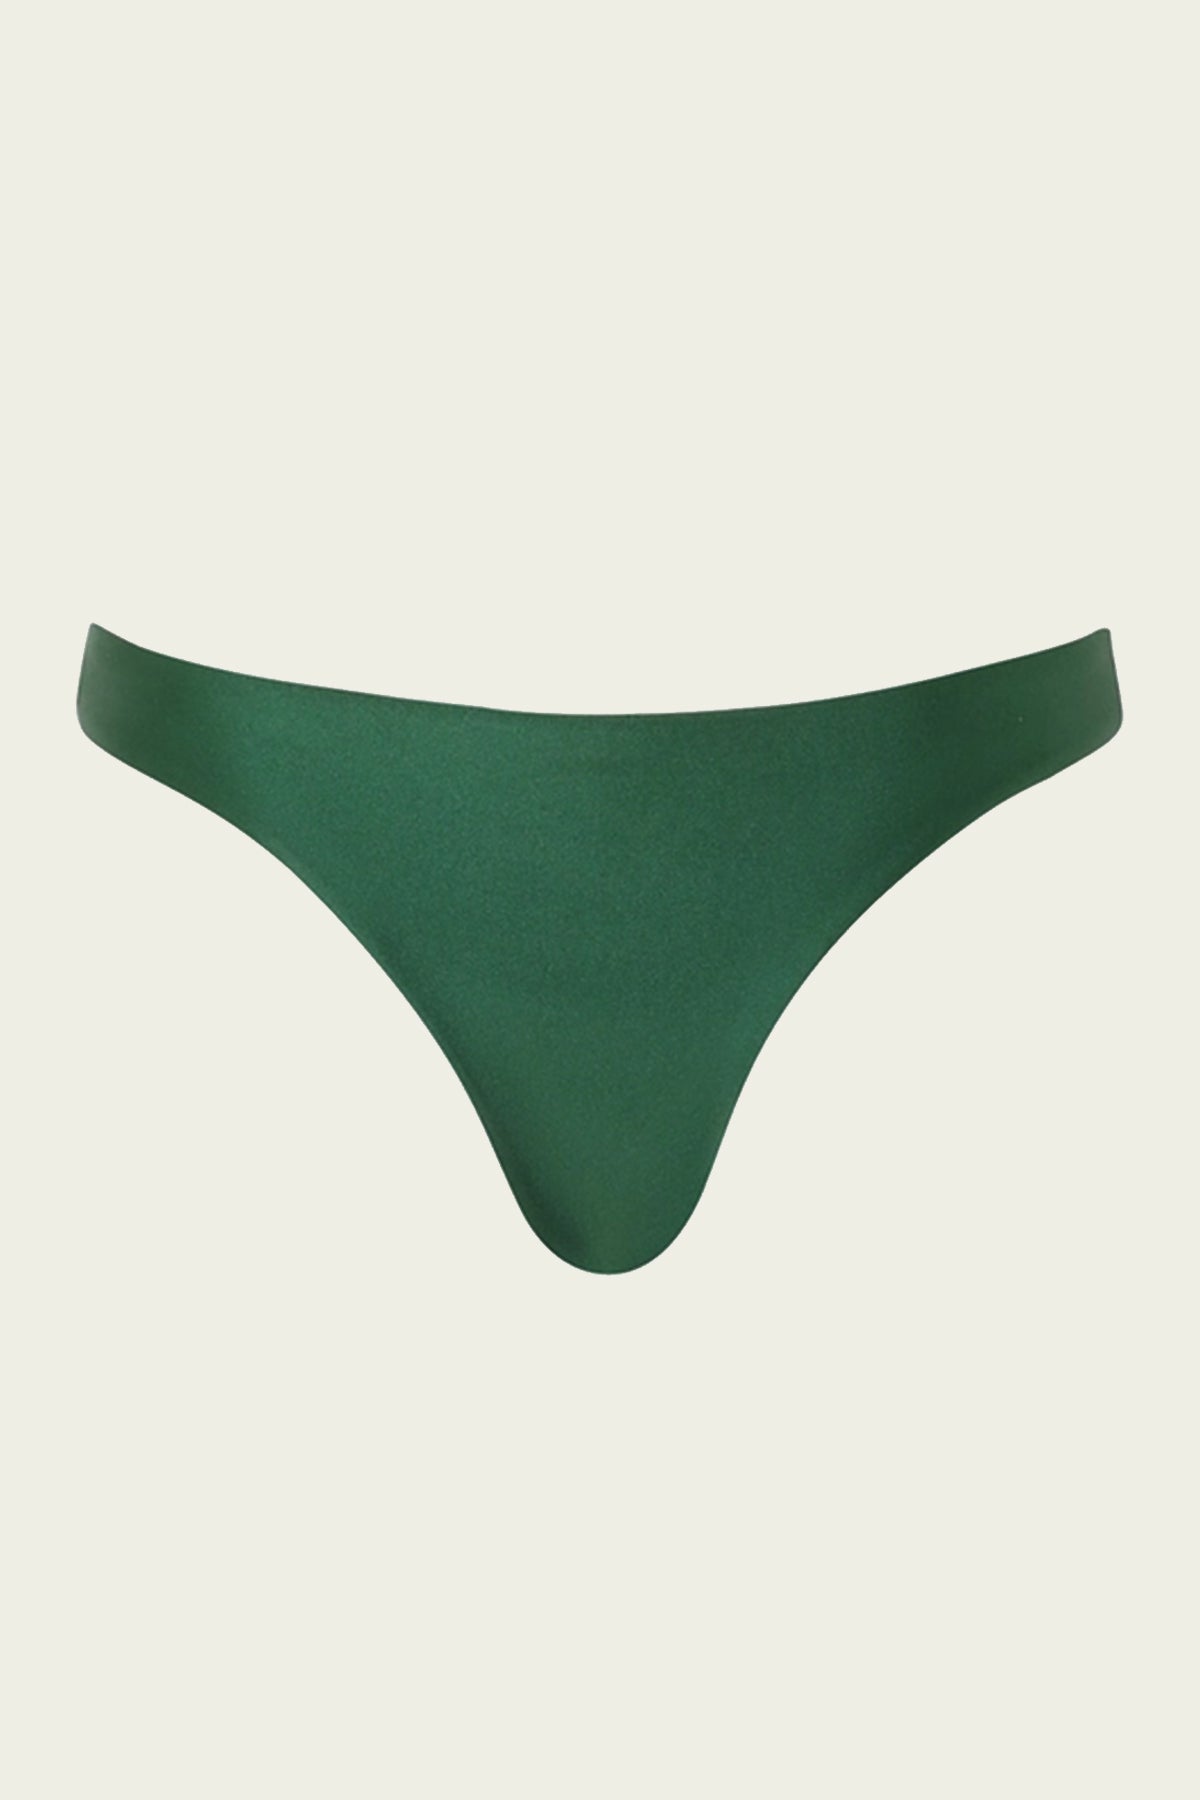 Waverly Skinny Pant in Emerald - shop-olivia.com